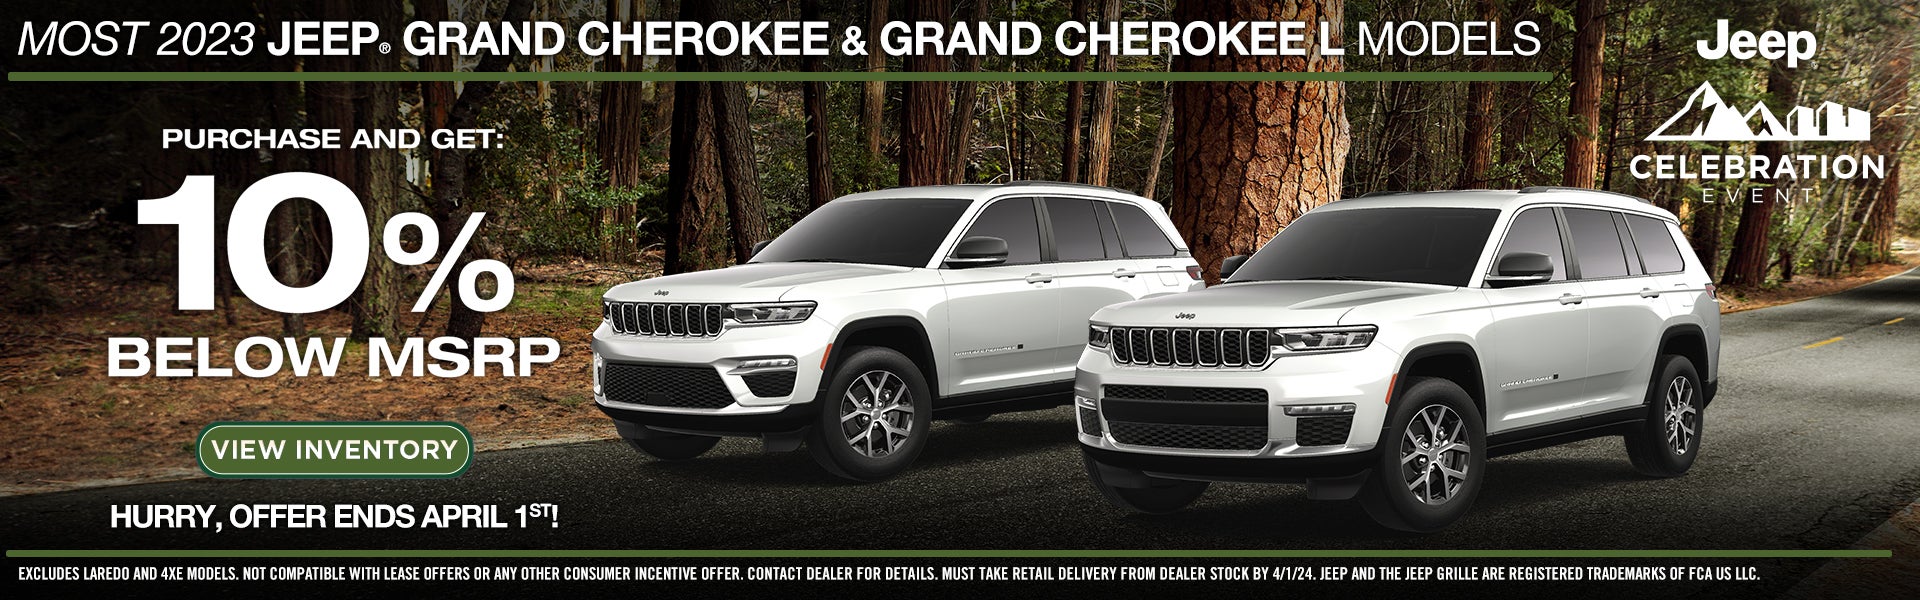 2023 Jeep Grand Cherokee Offers